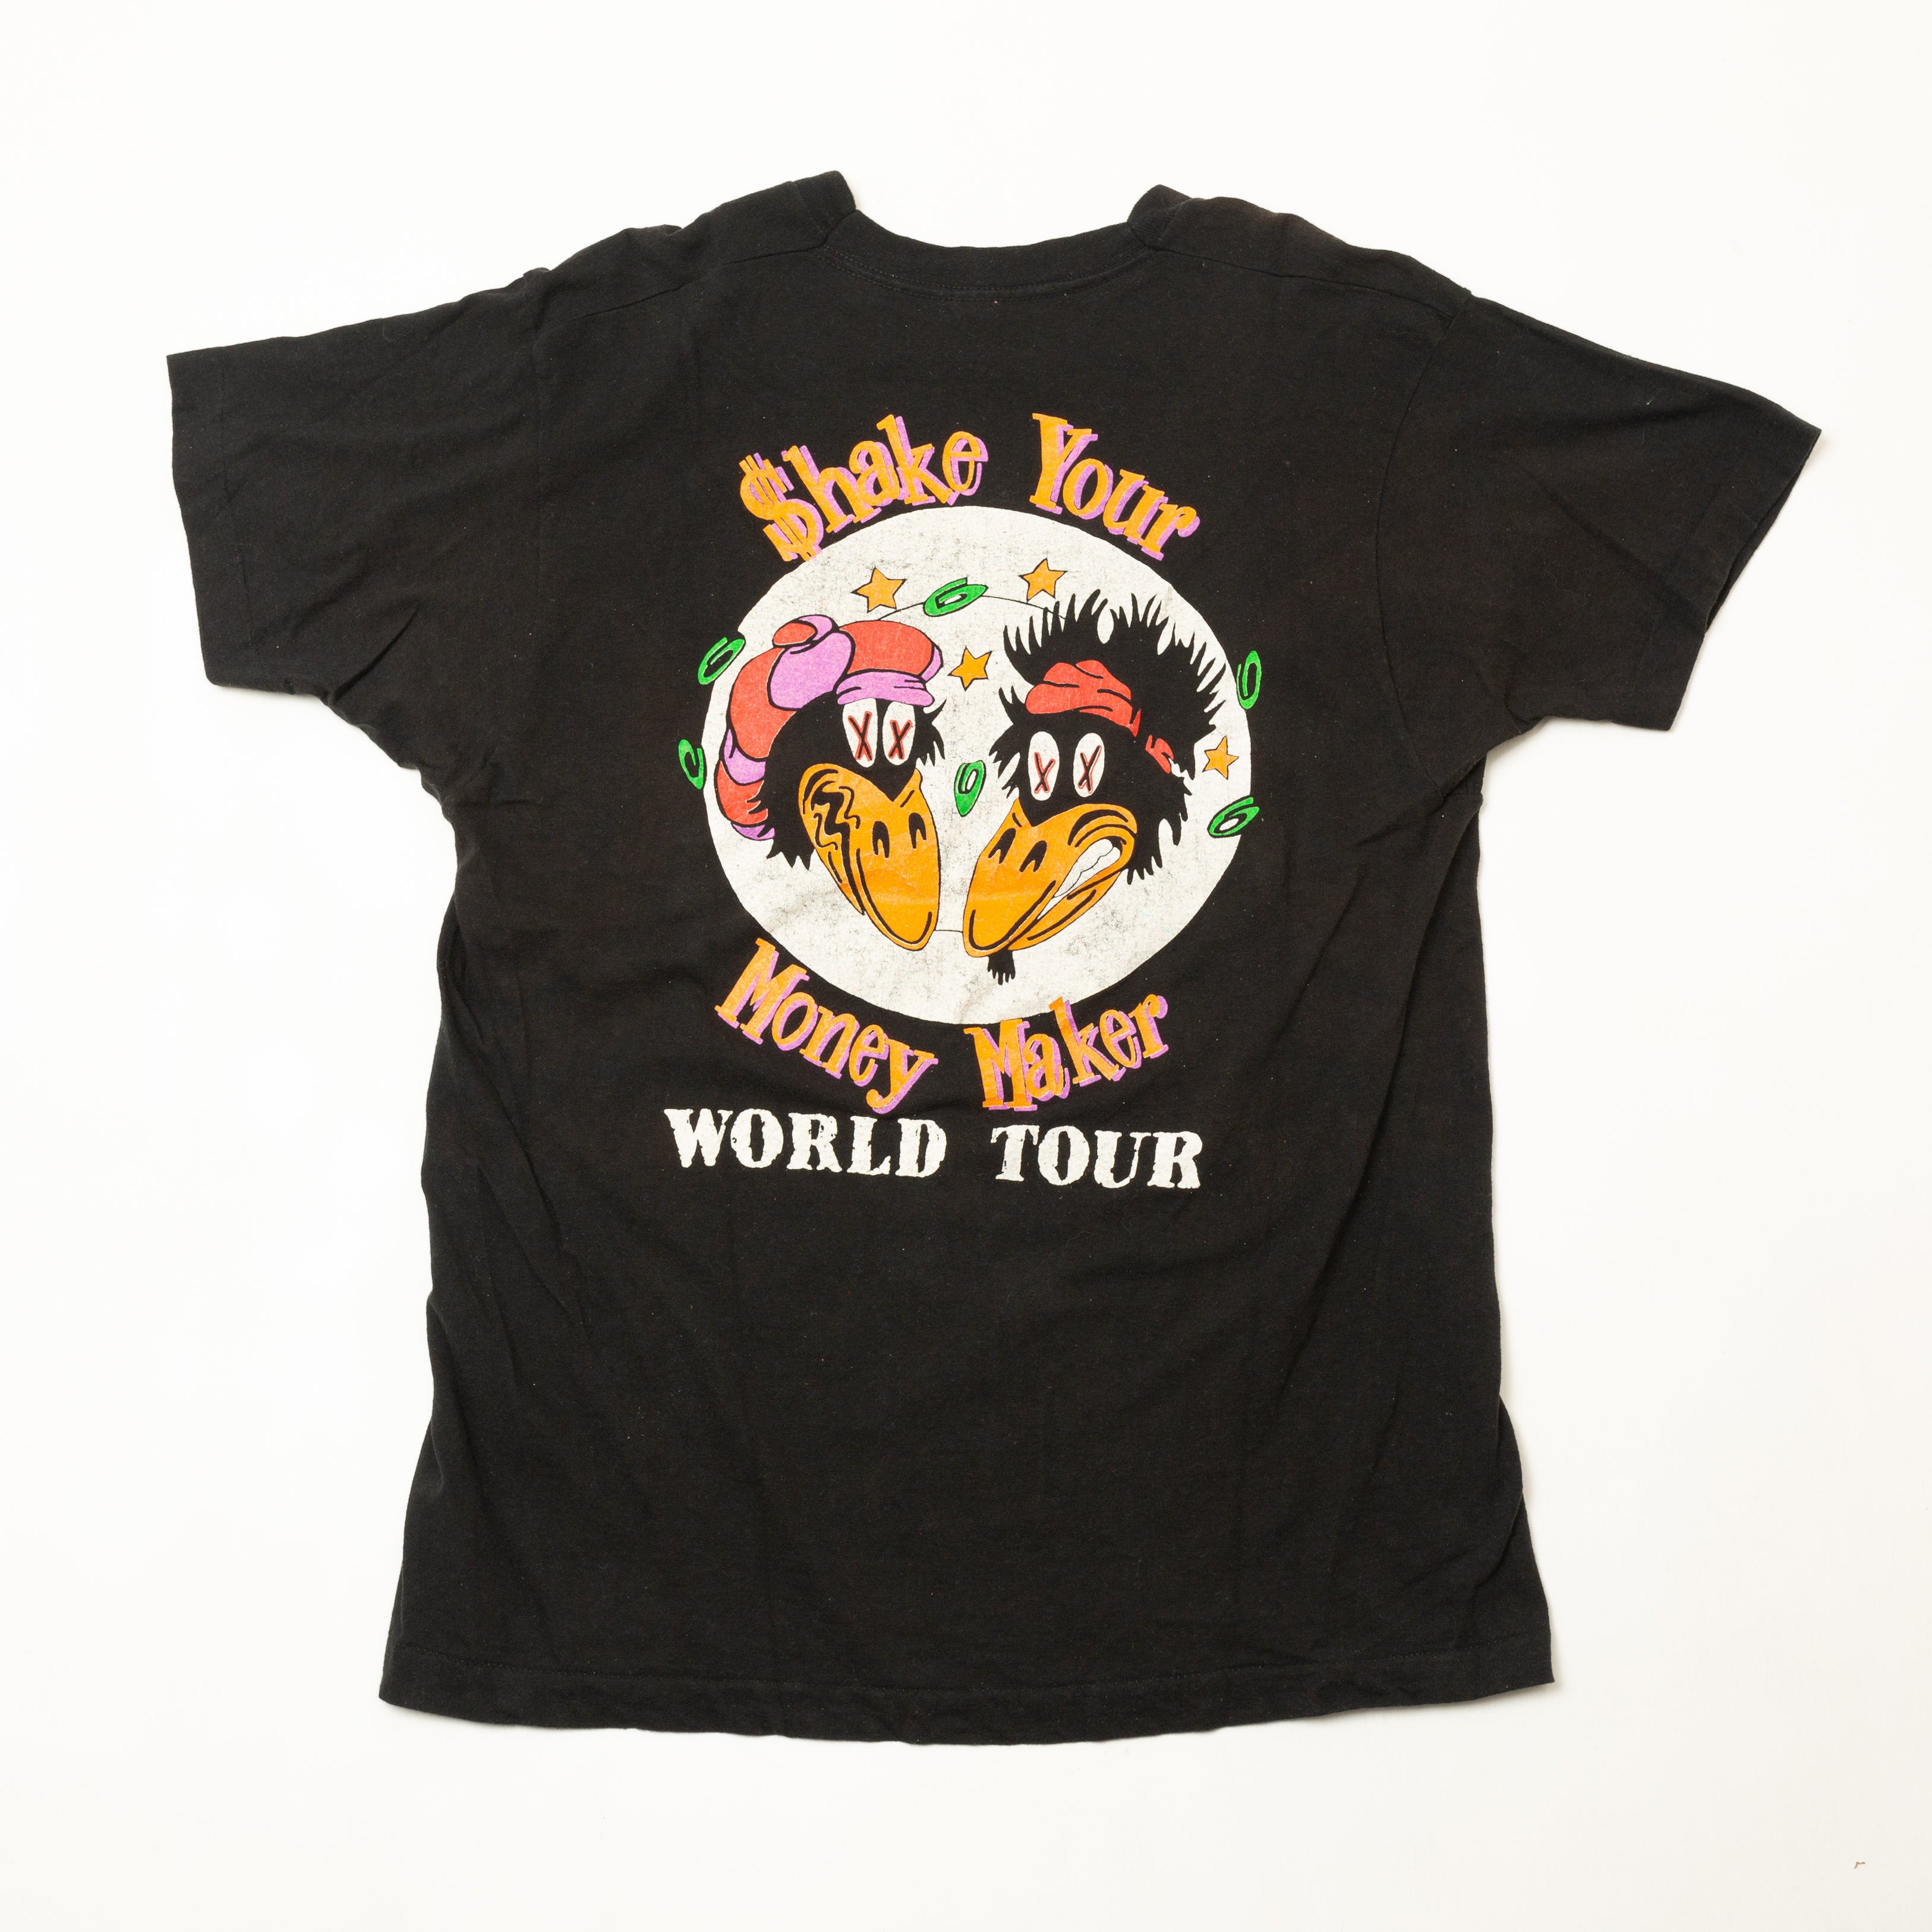 1990 The Black Crowes Shake Your Money Maker Tour T-Shirt Size XL